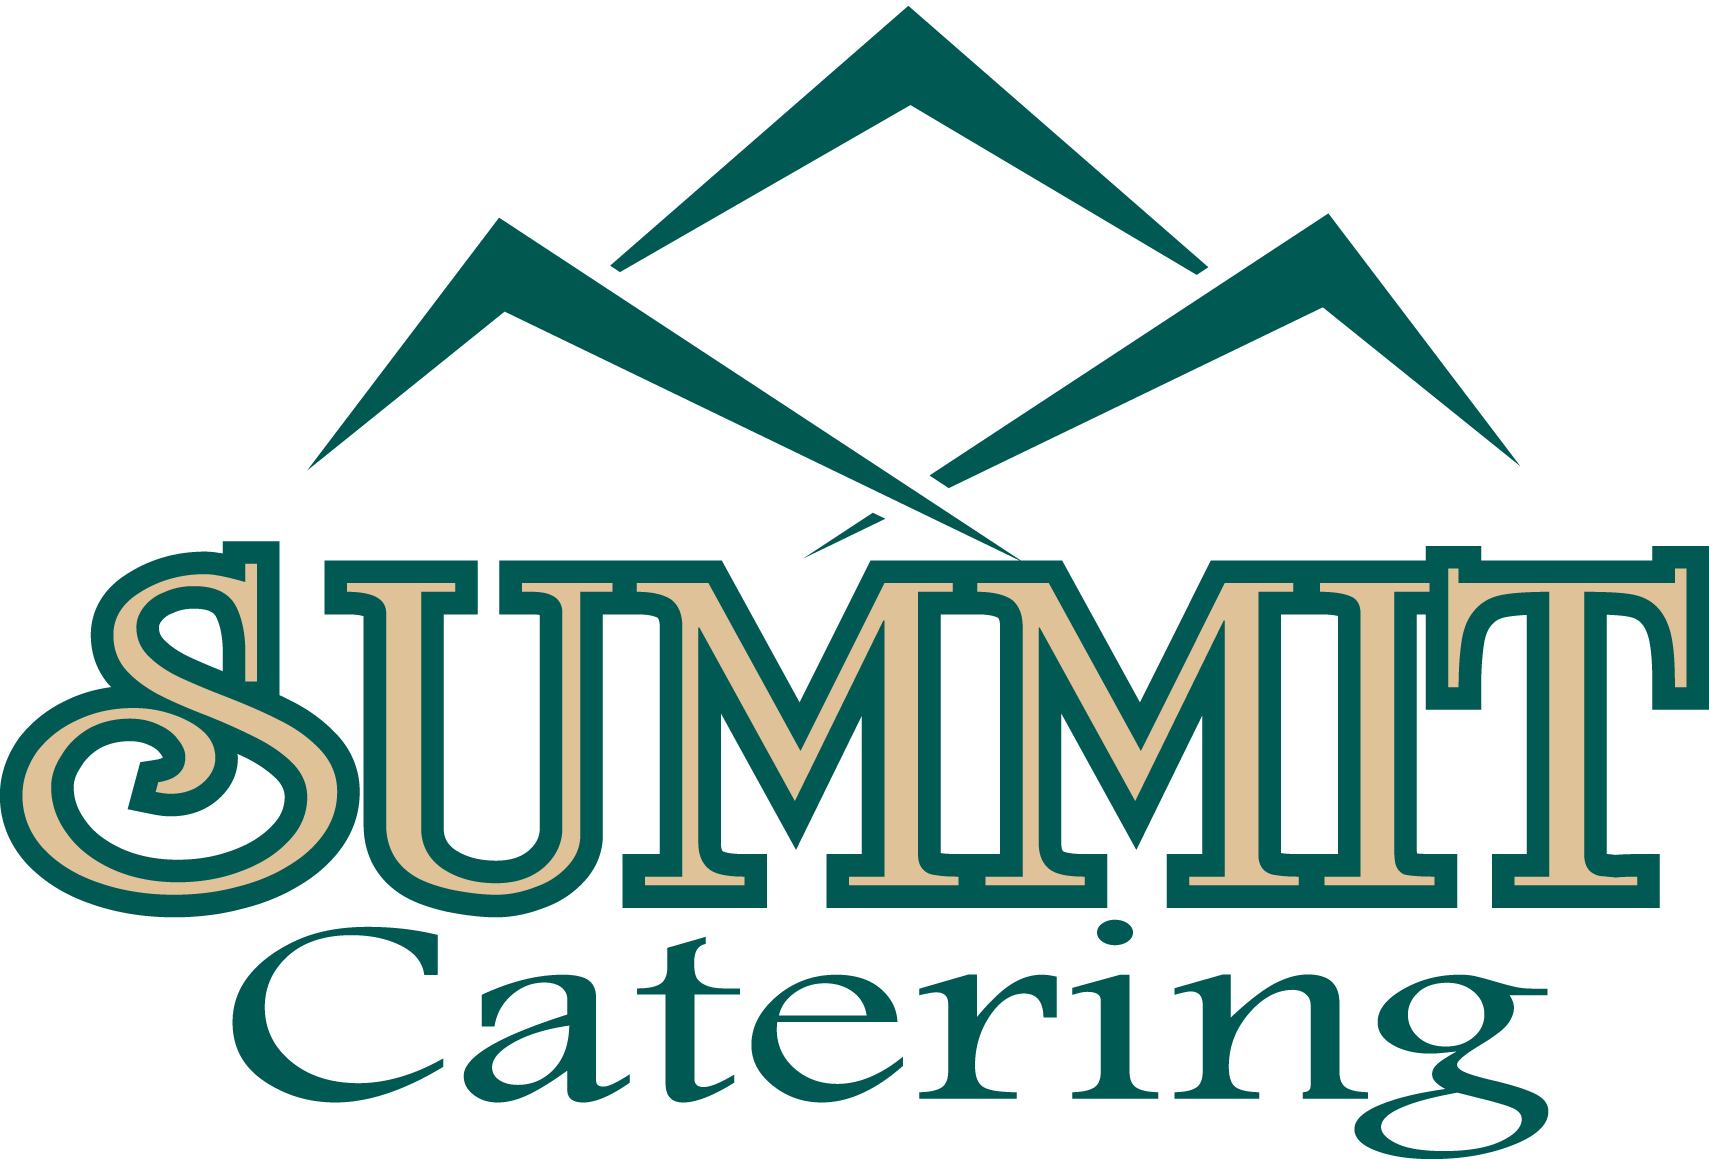 Summit Catering logo